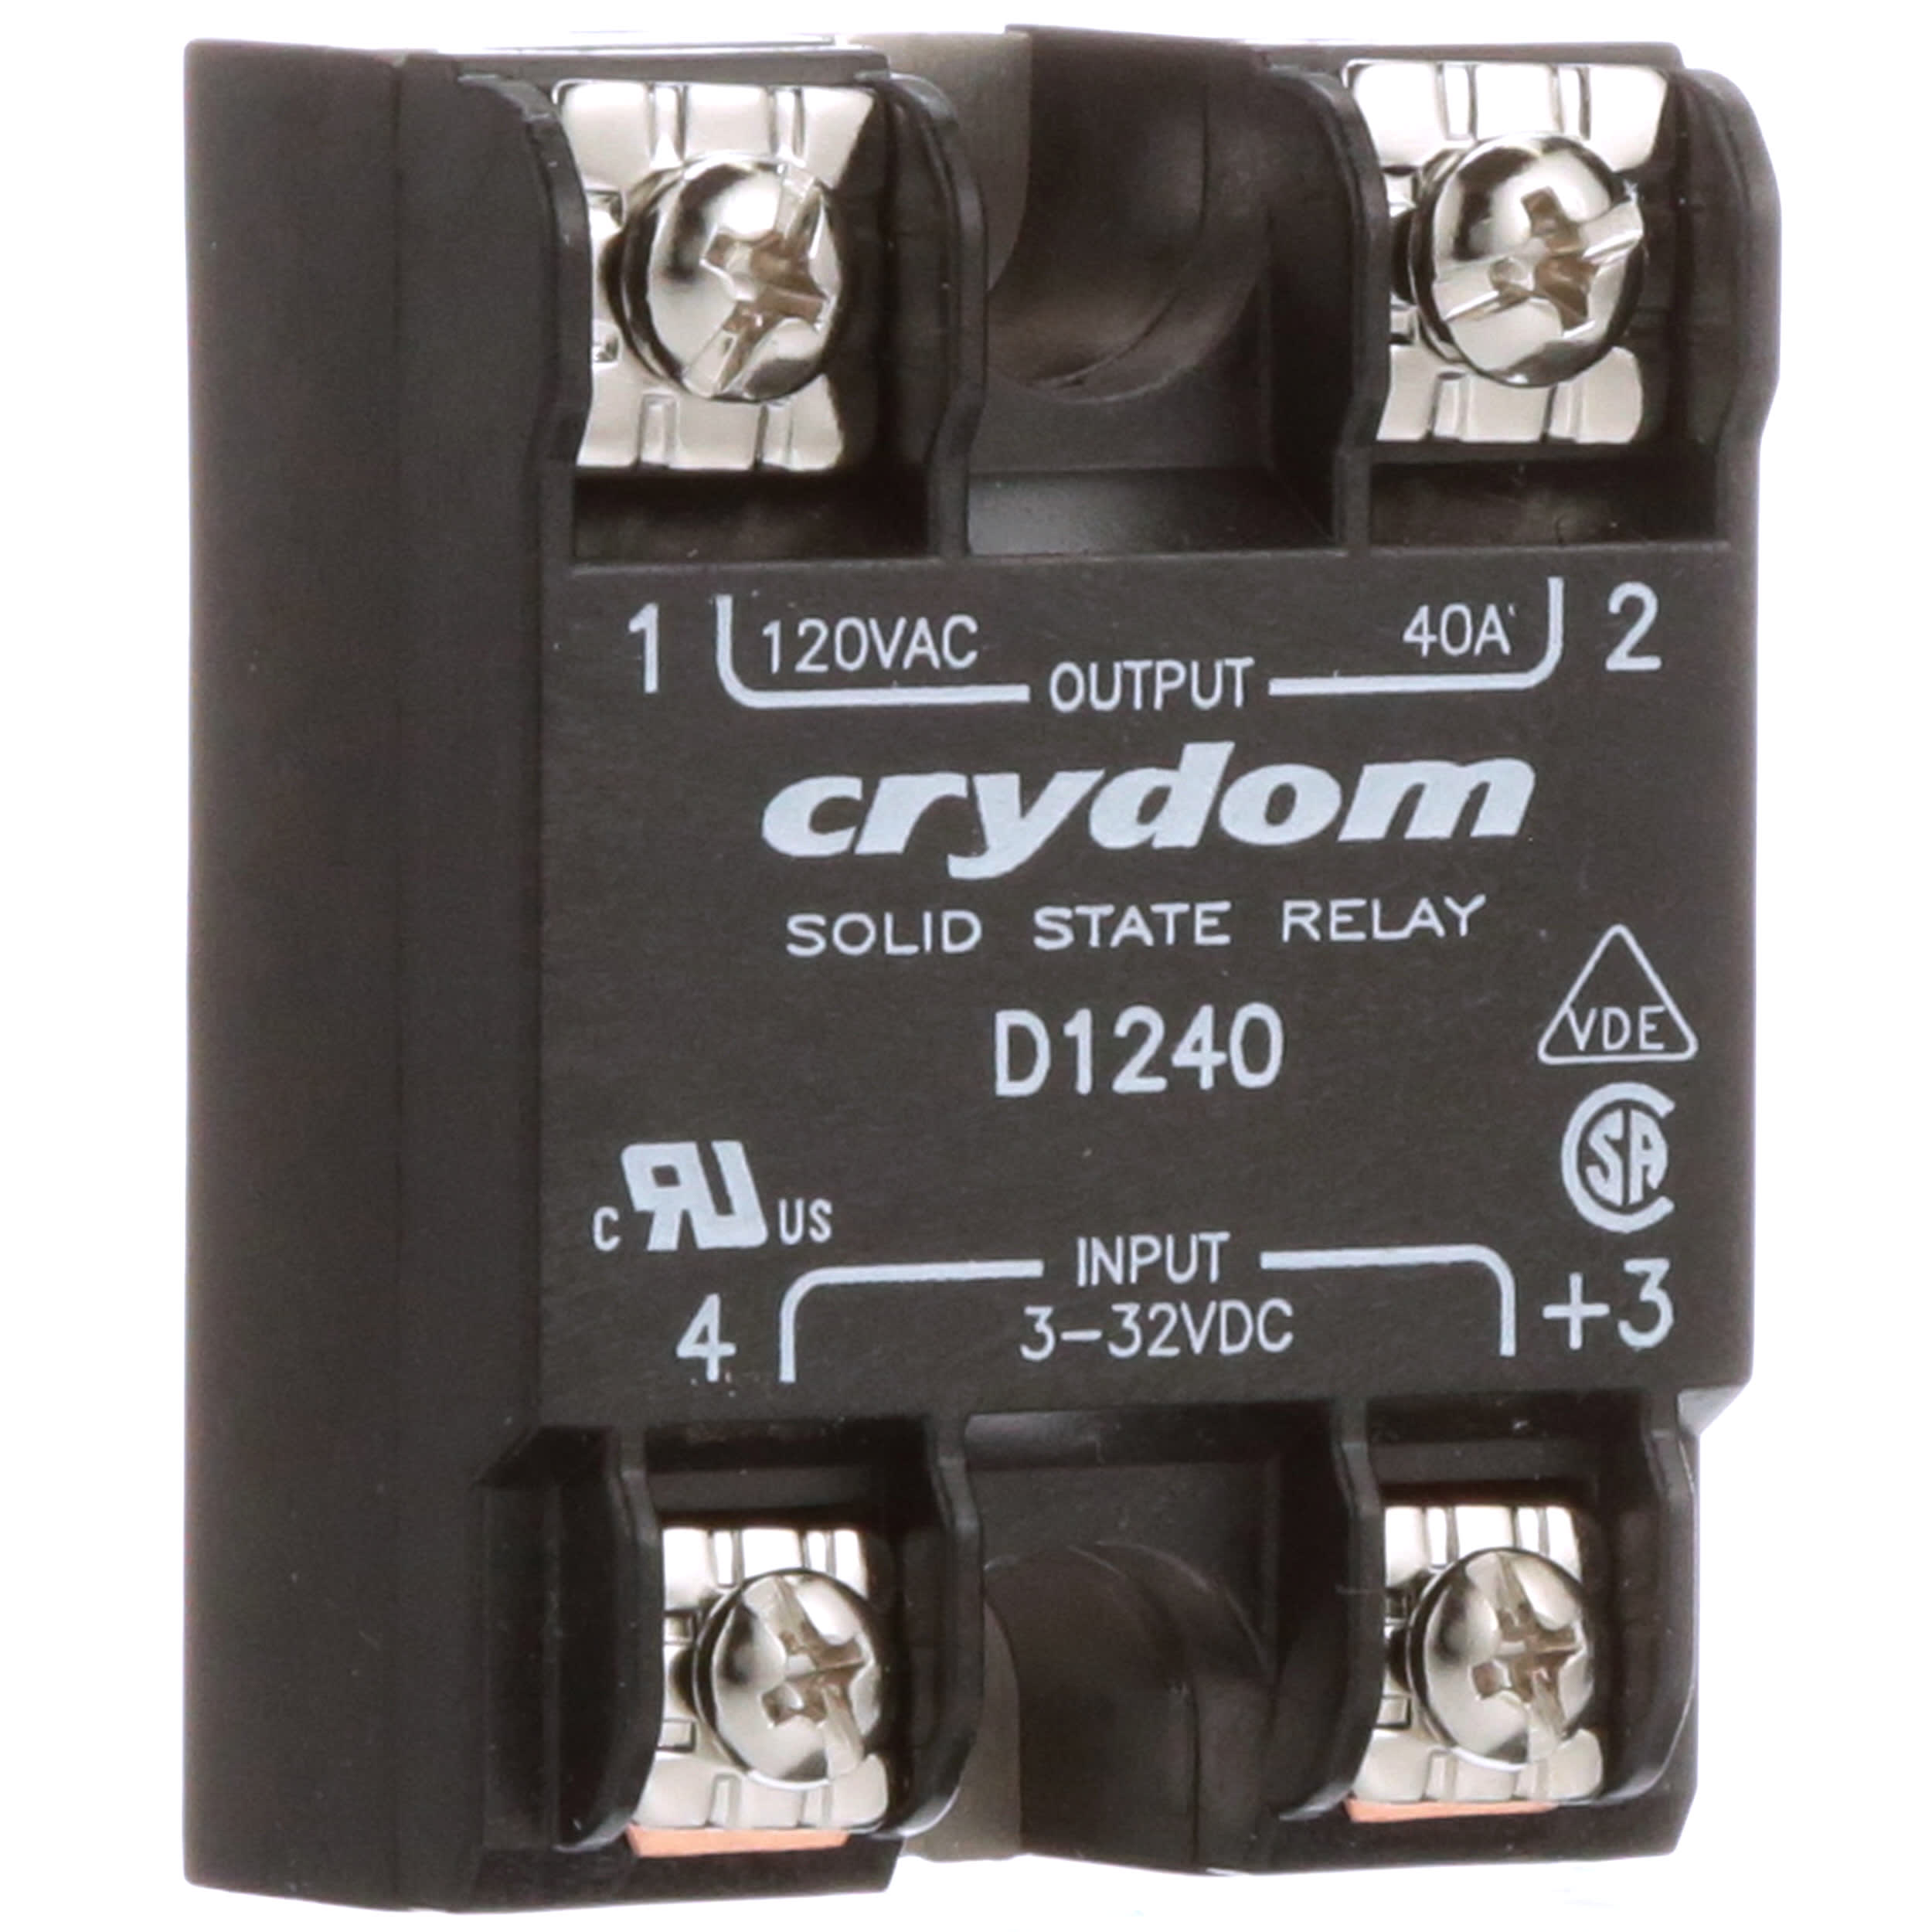   CRYDOM (brand of Sensata Technologies) D1240